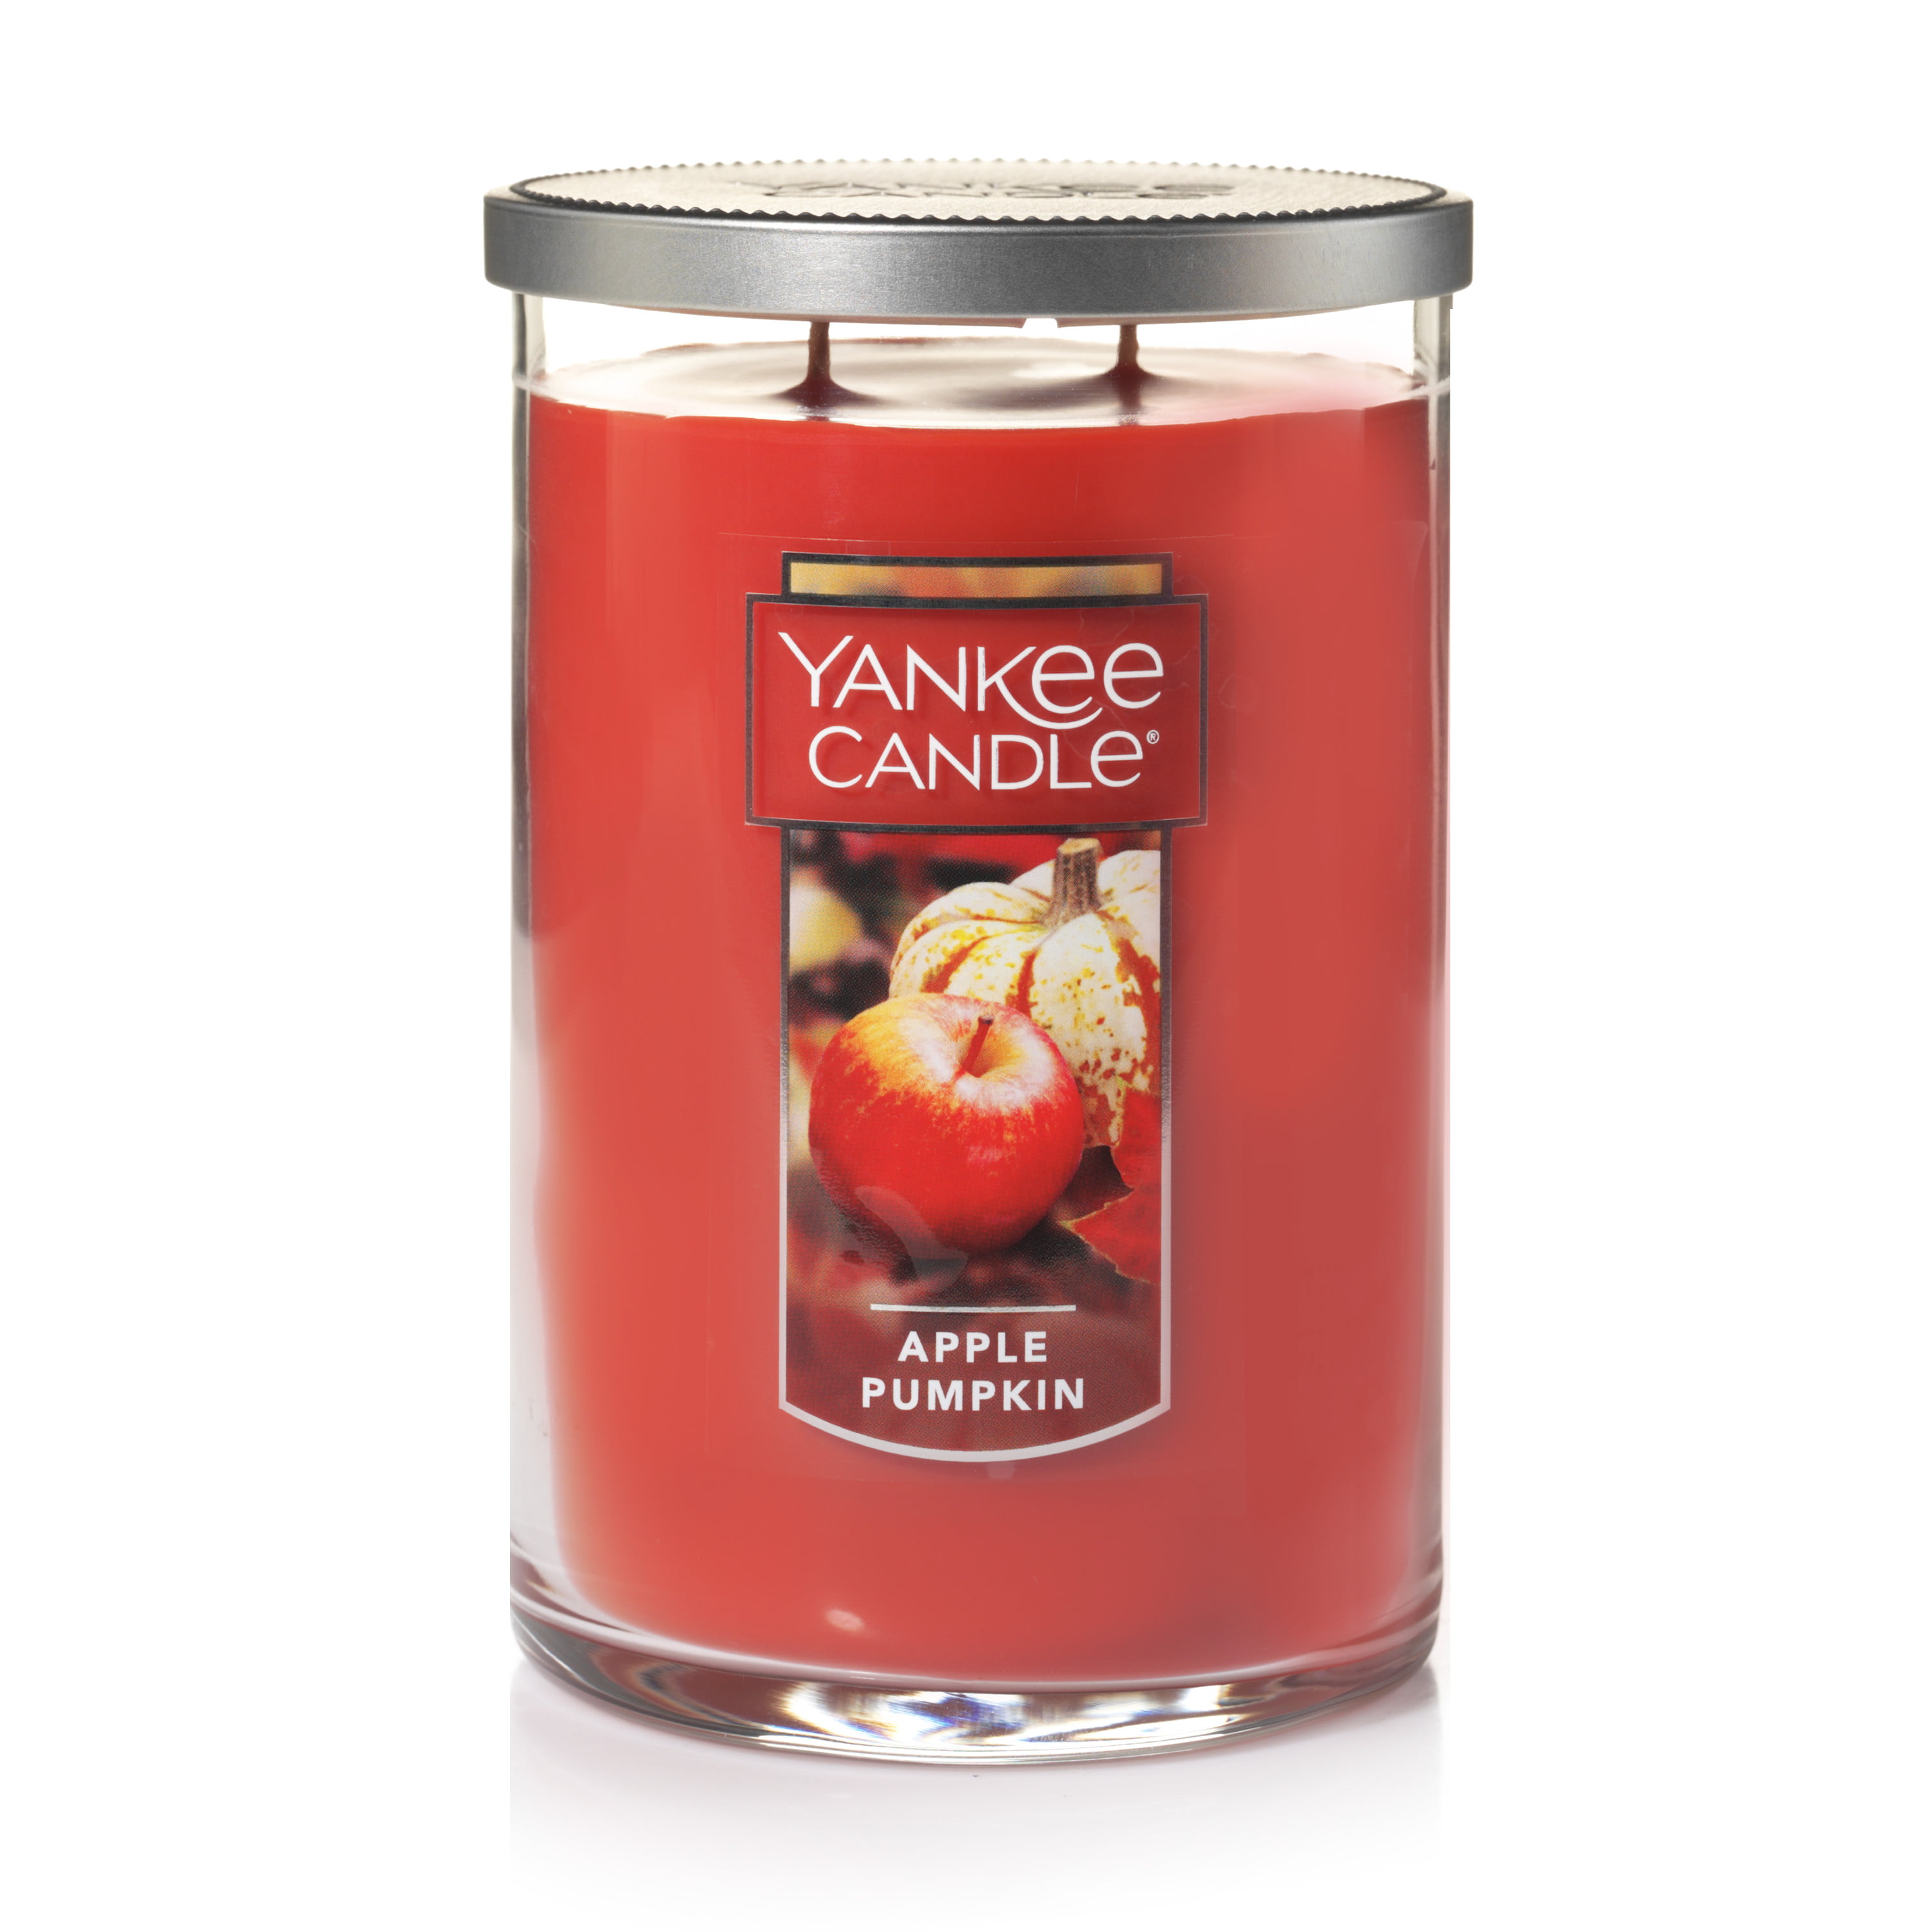 Yankee Candle Apple Pumpkin - Large 2-Wick Tumbler Candle - Walmart.com ...